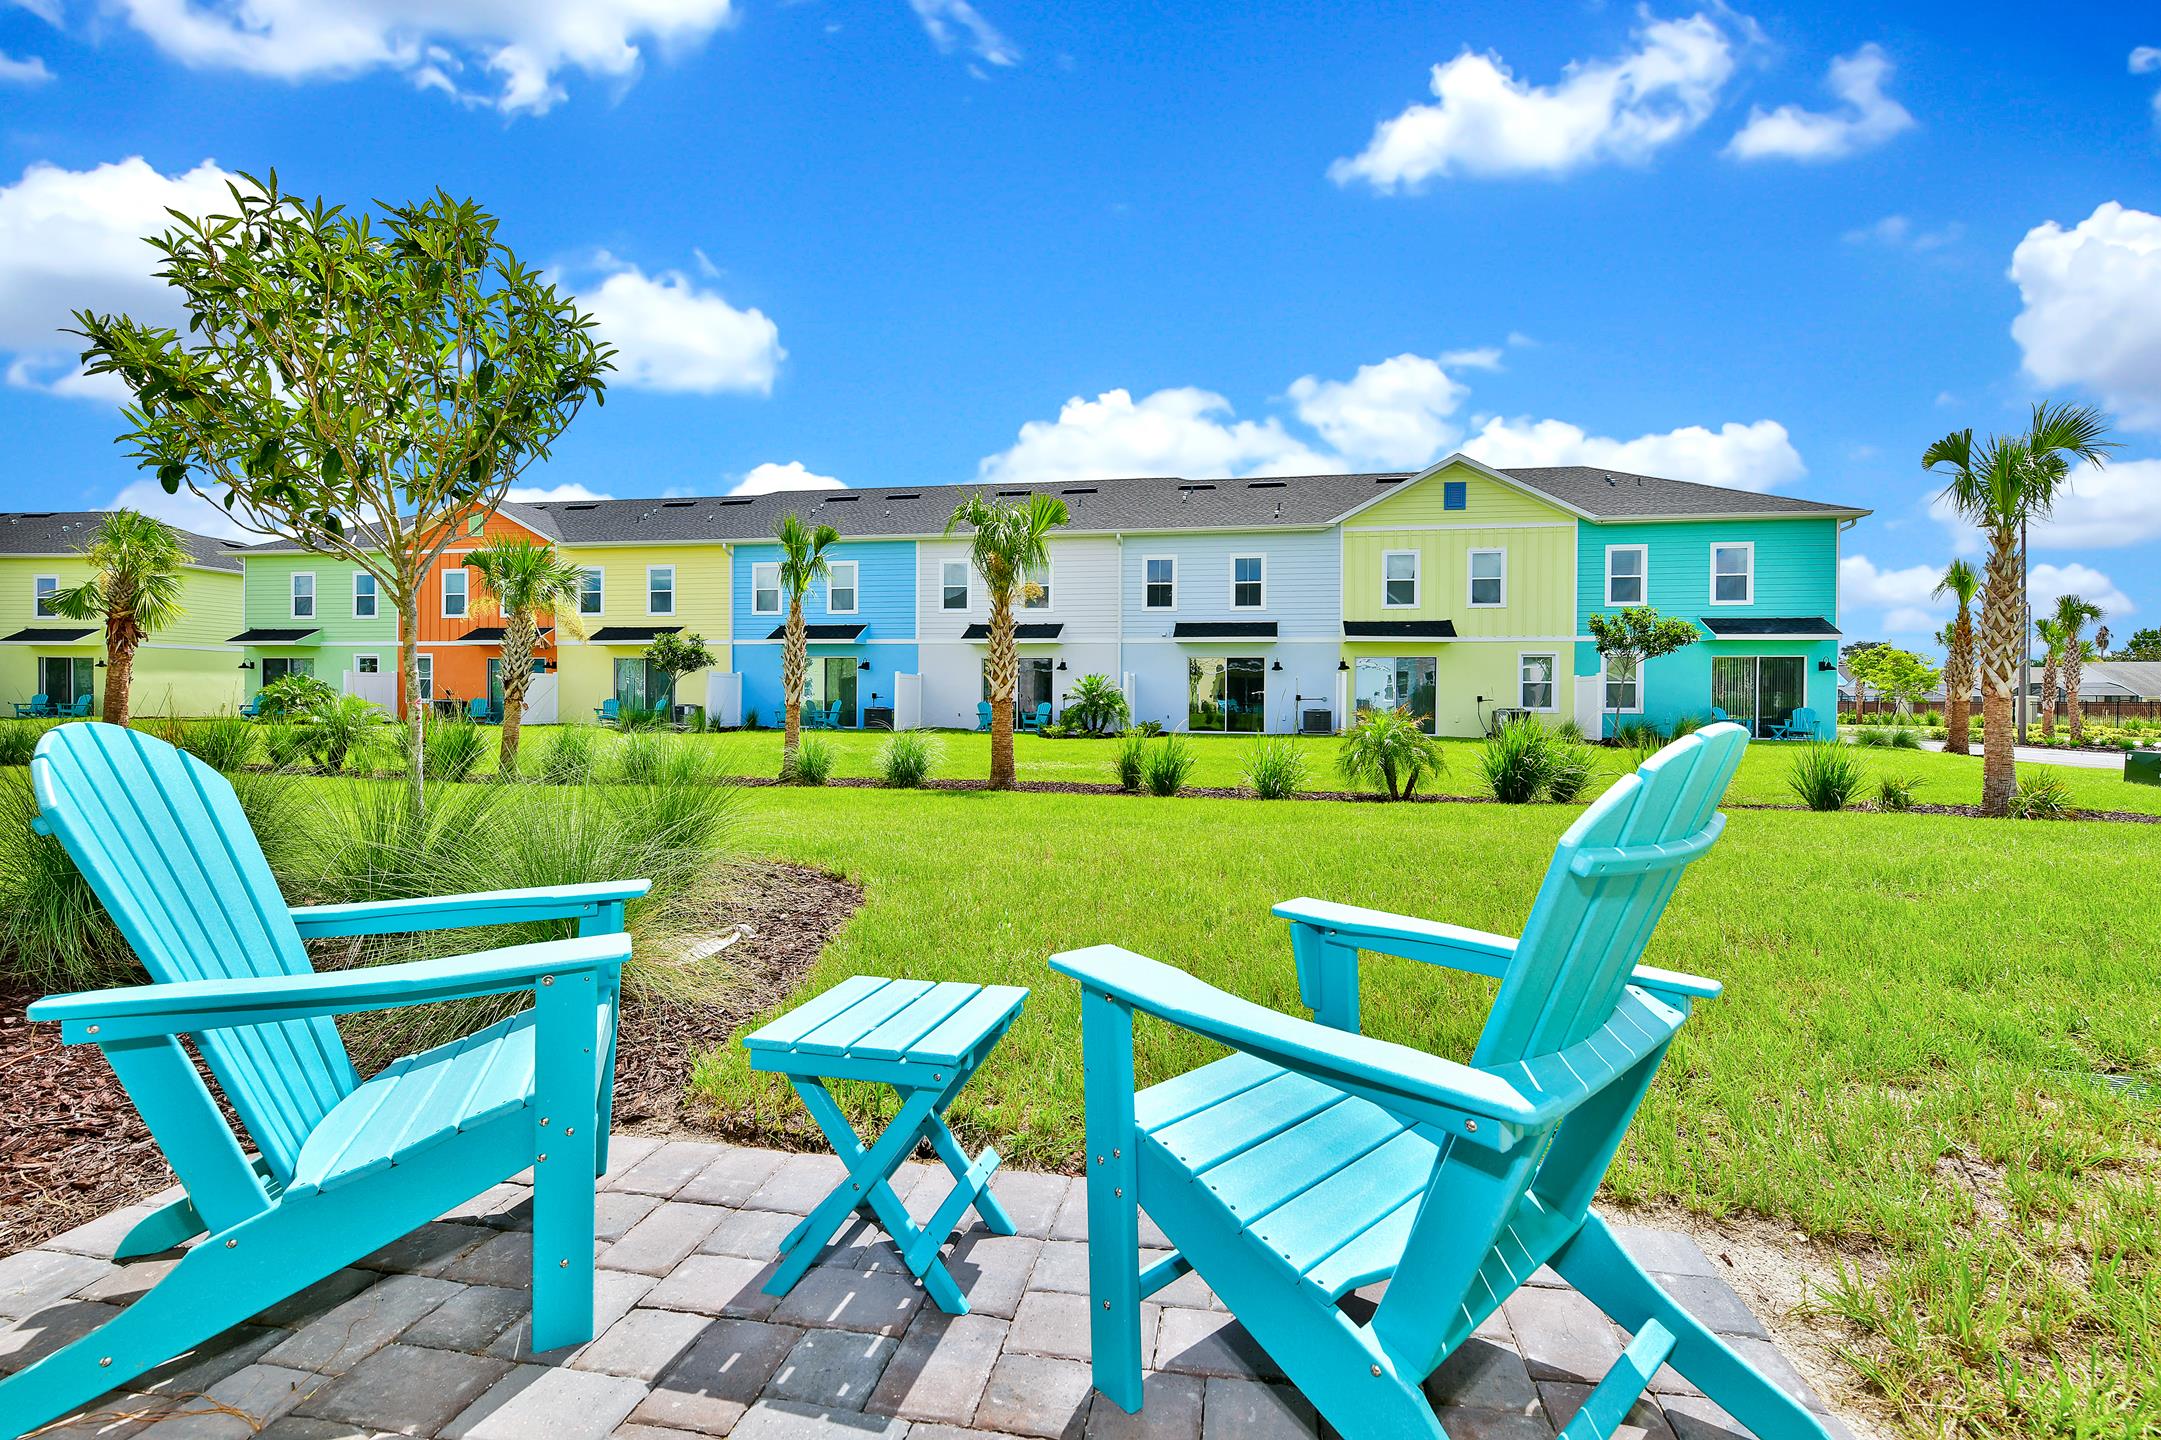 Property Image 2 - Sunny Villa near Disney with Margaritaville Resort Access - 8111CP